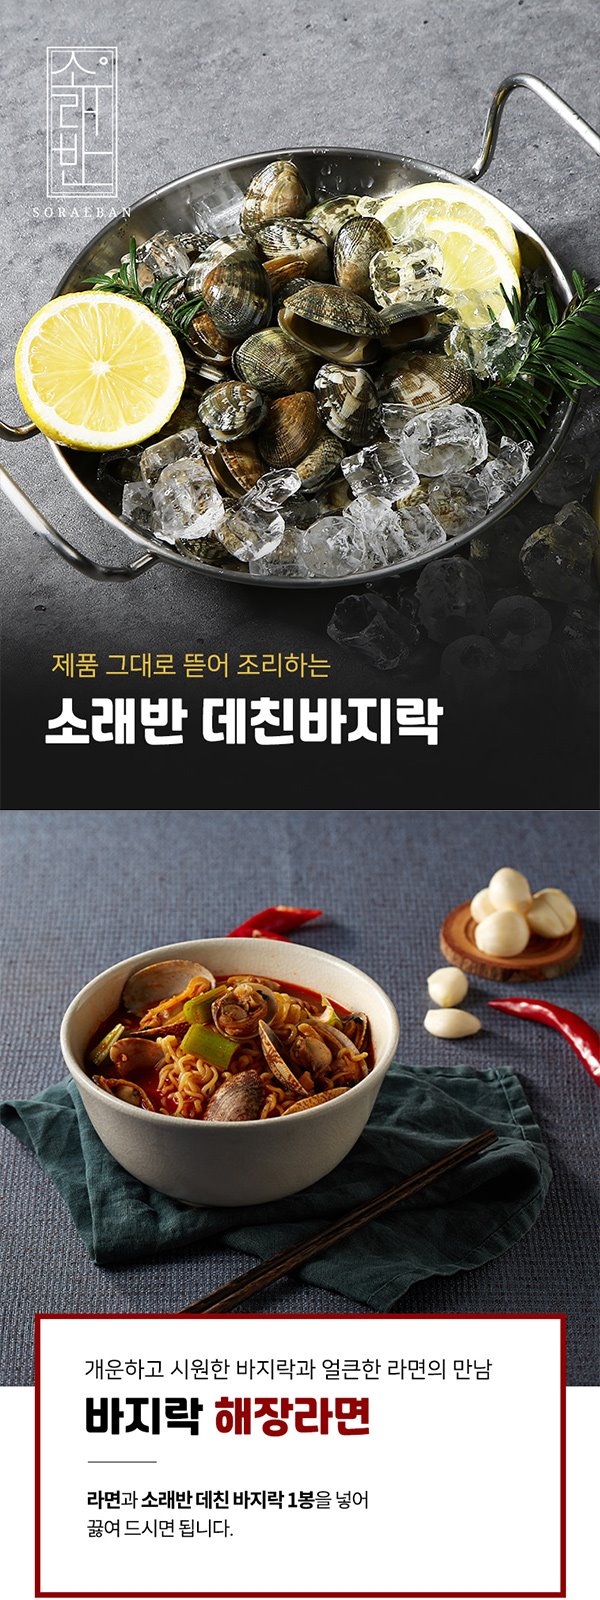 DH_Seafood(주) food_0091_1